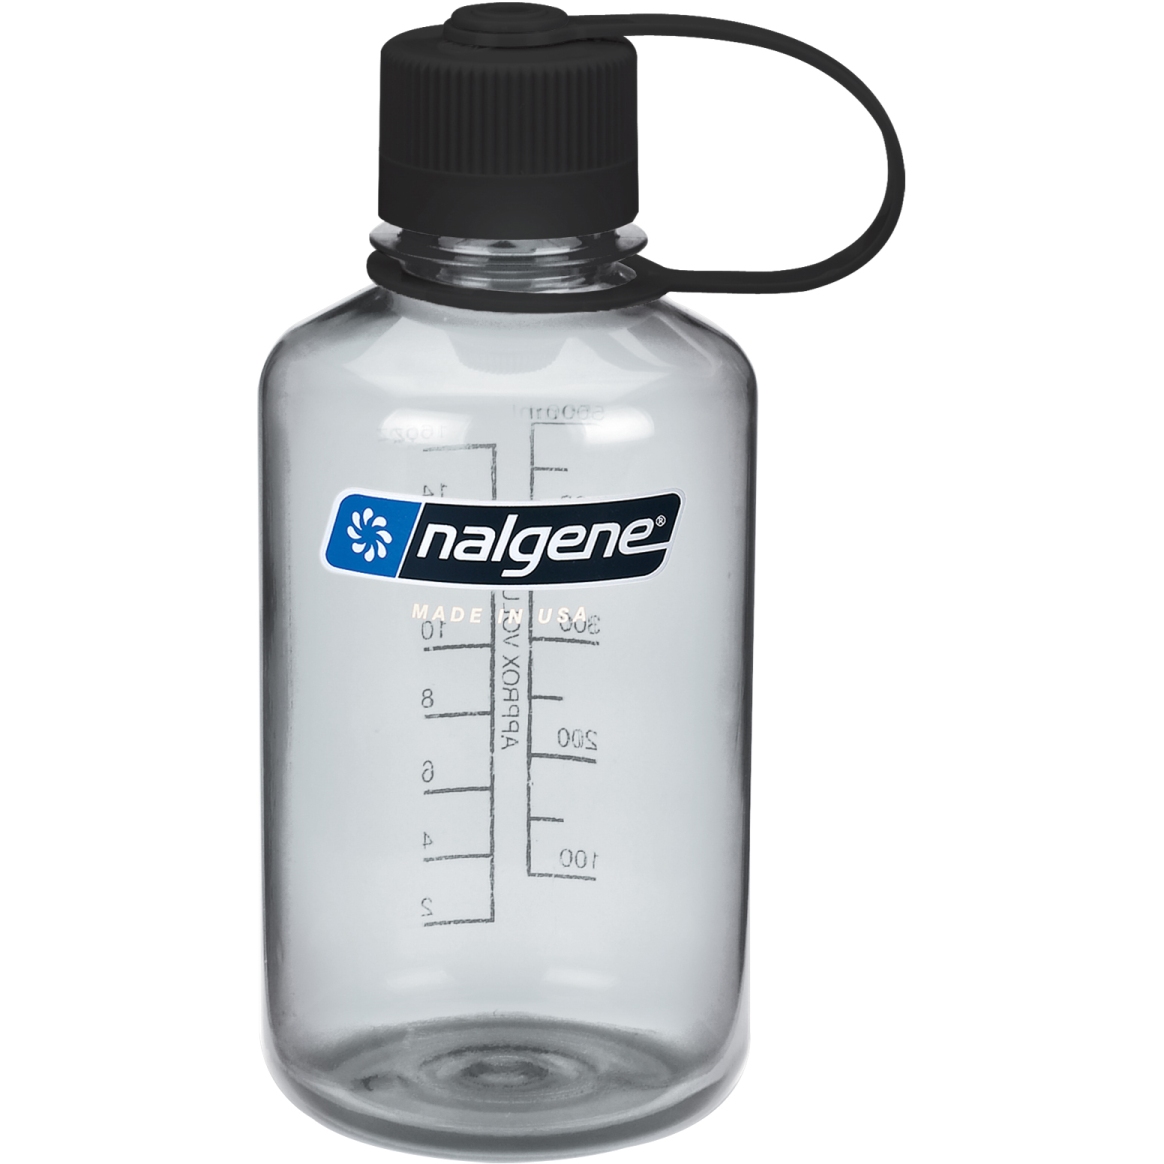 Productfoto van Nalgene Narrow Mouth Sustain Drinkfles 0,5l - grijs